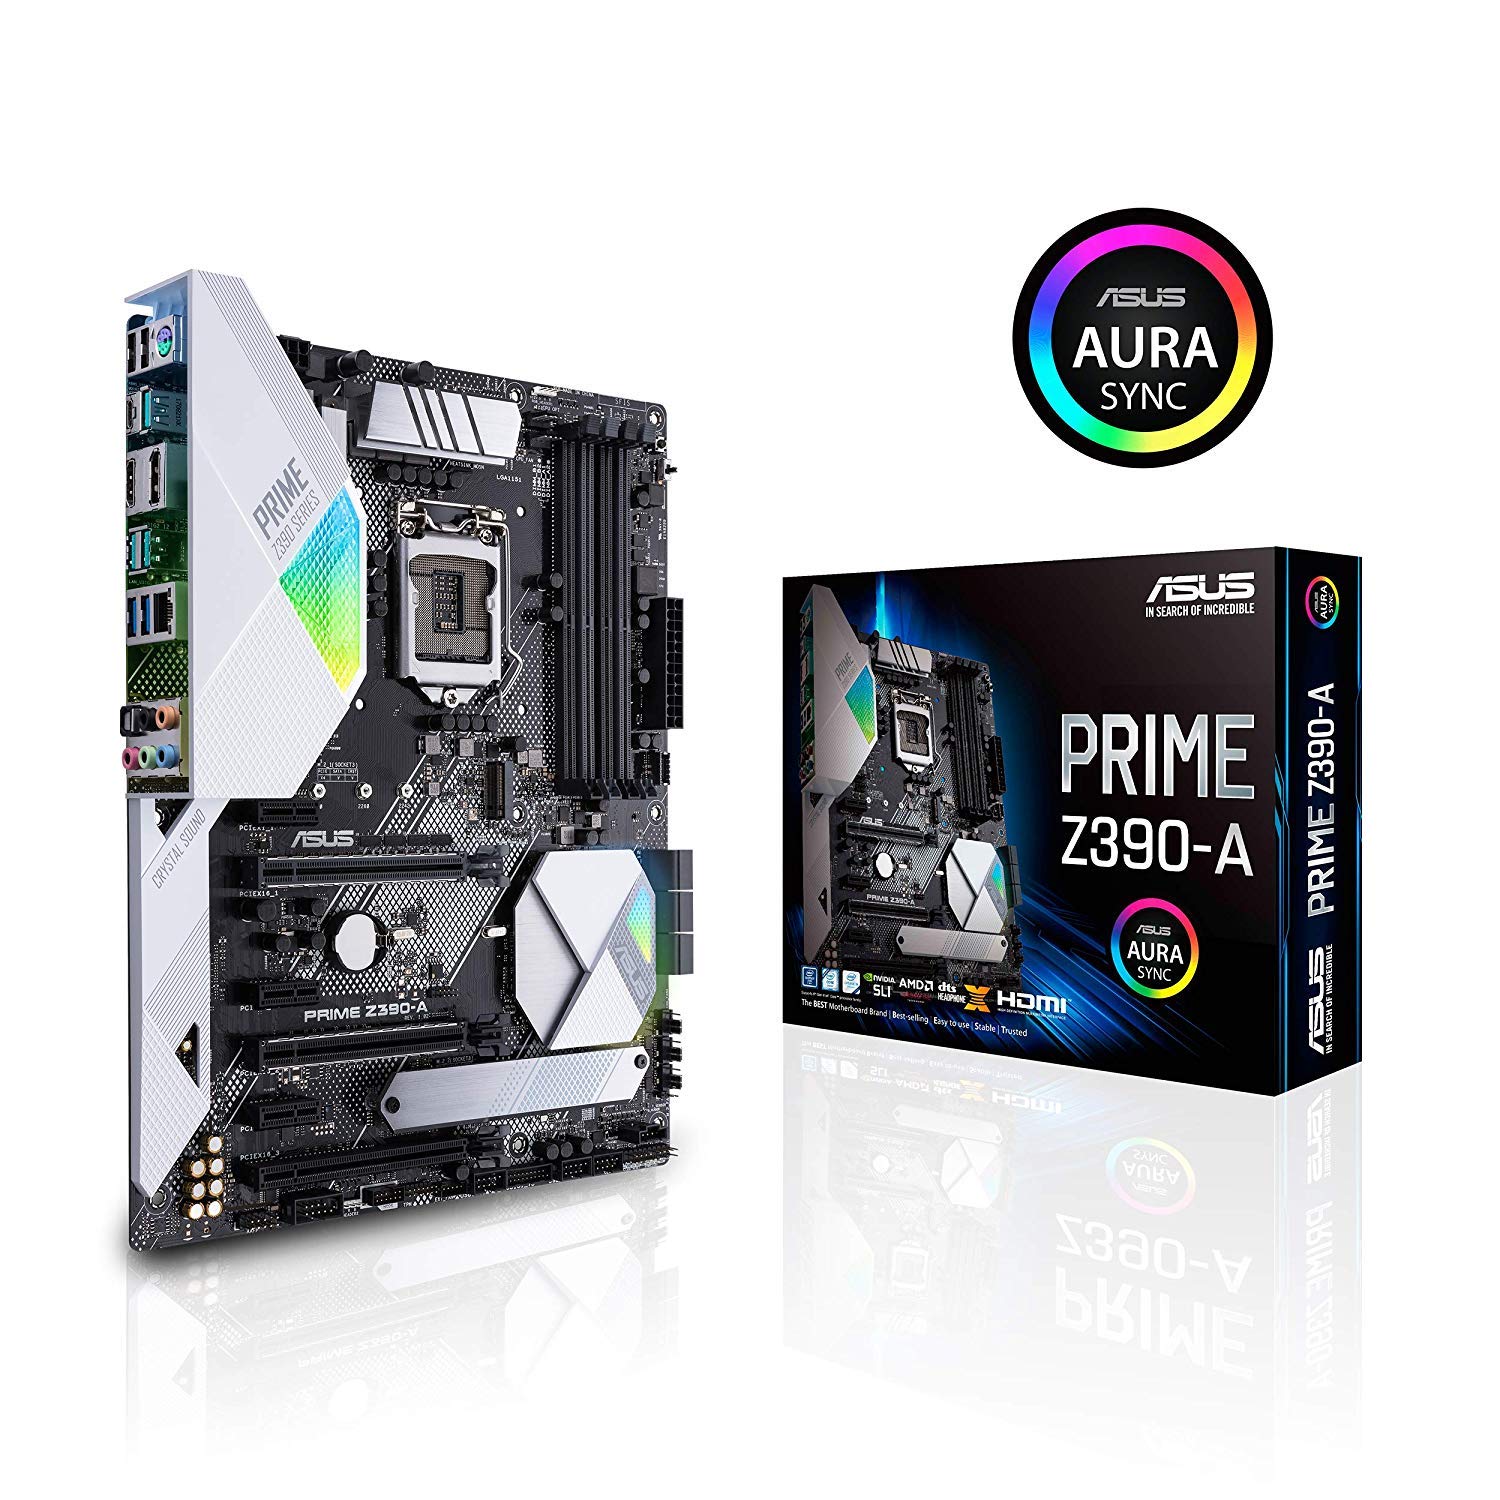 ASUS Prime Z390-A LGA 1151 ATX Intel Motherboard: $164.99